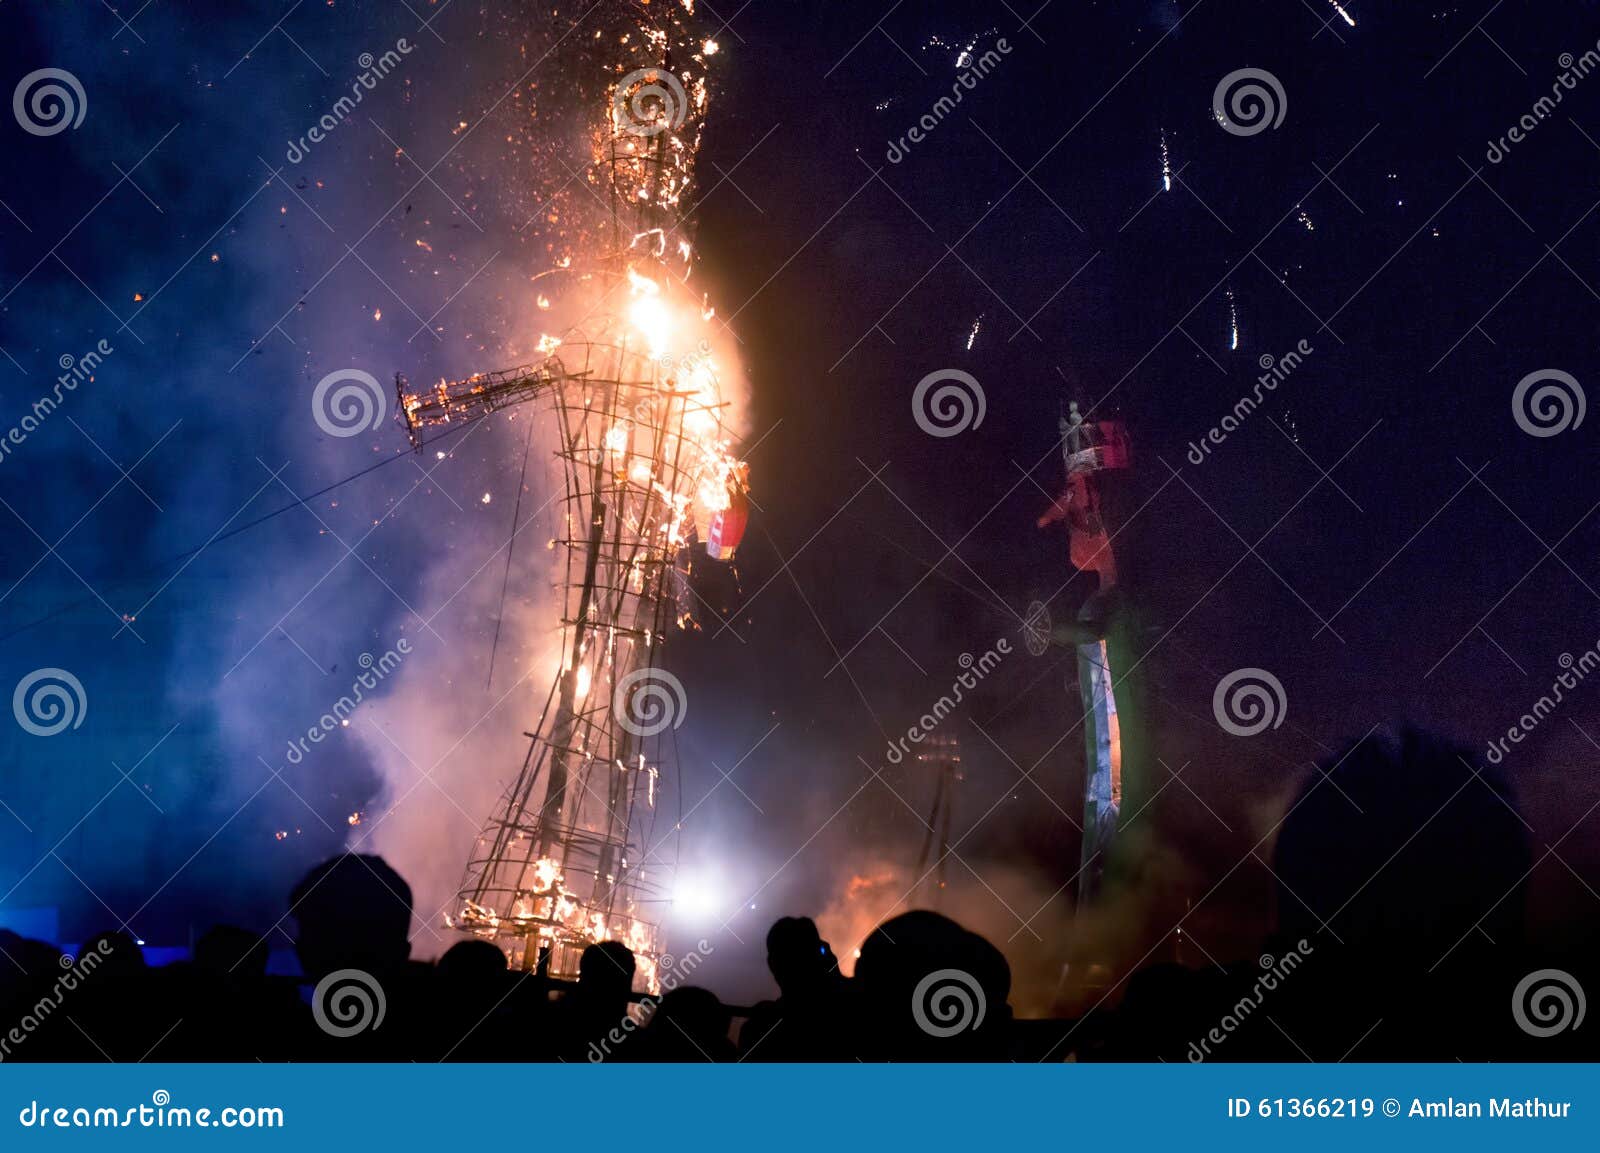 effigy of ravan being burnt on dussera